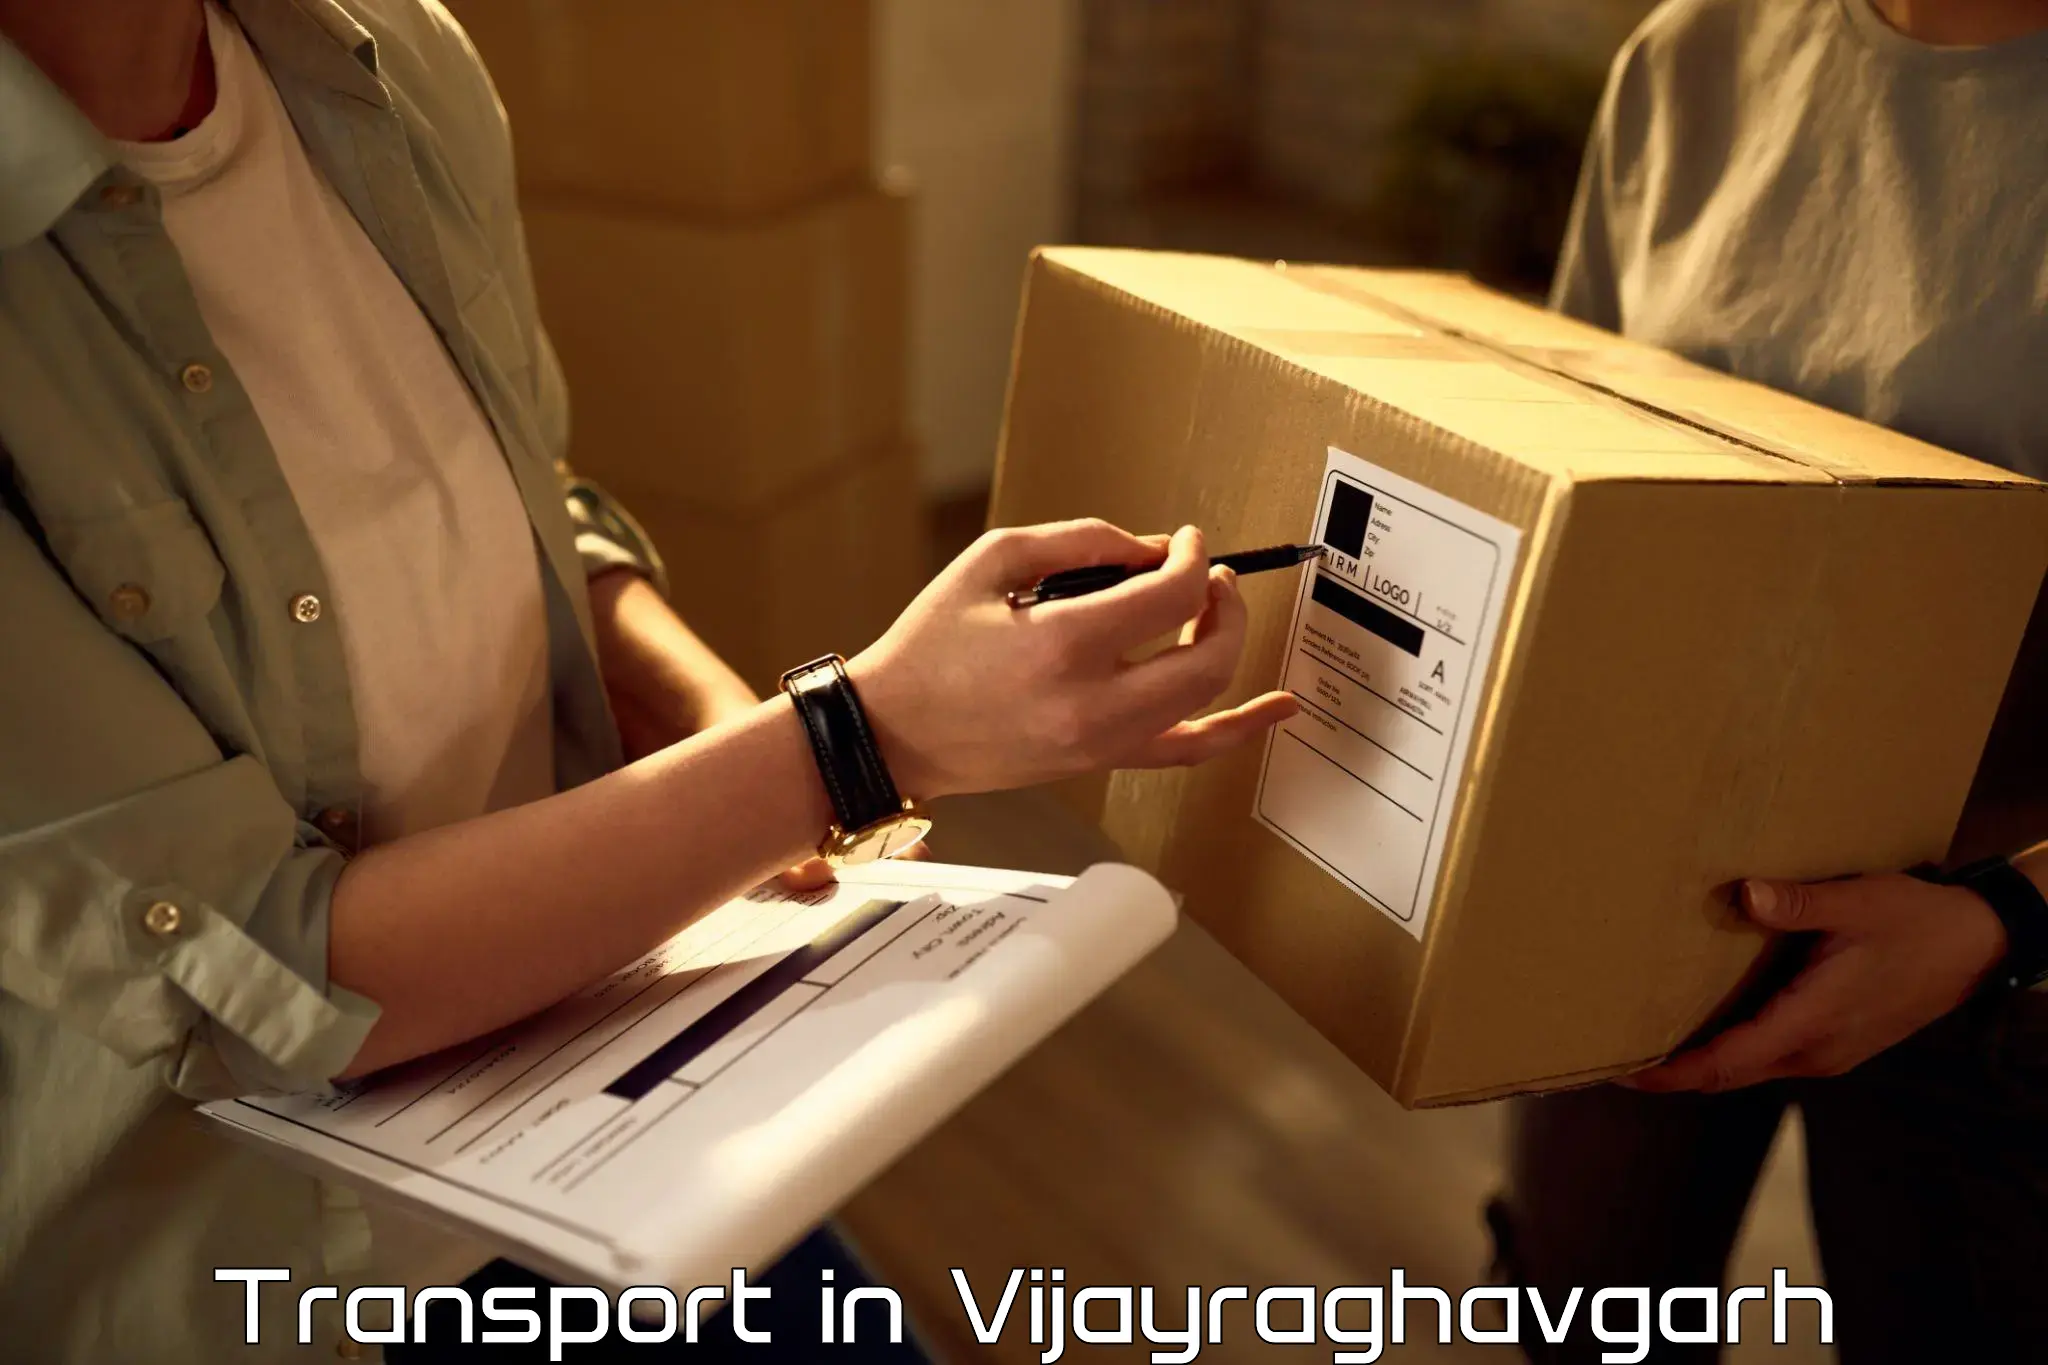 Interstate goods transport in Vijayraghavgarh